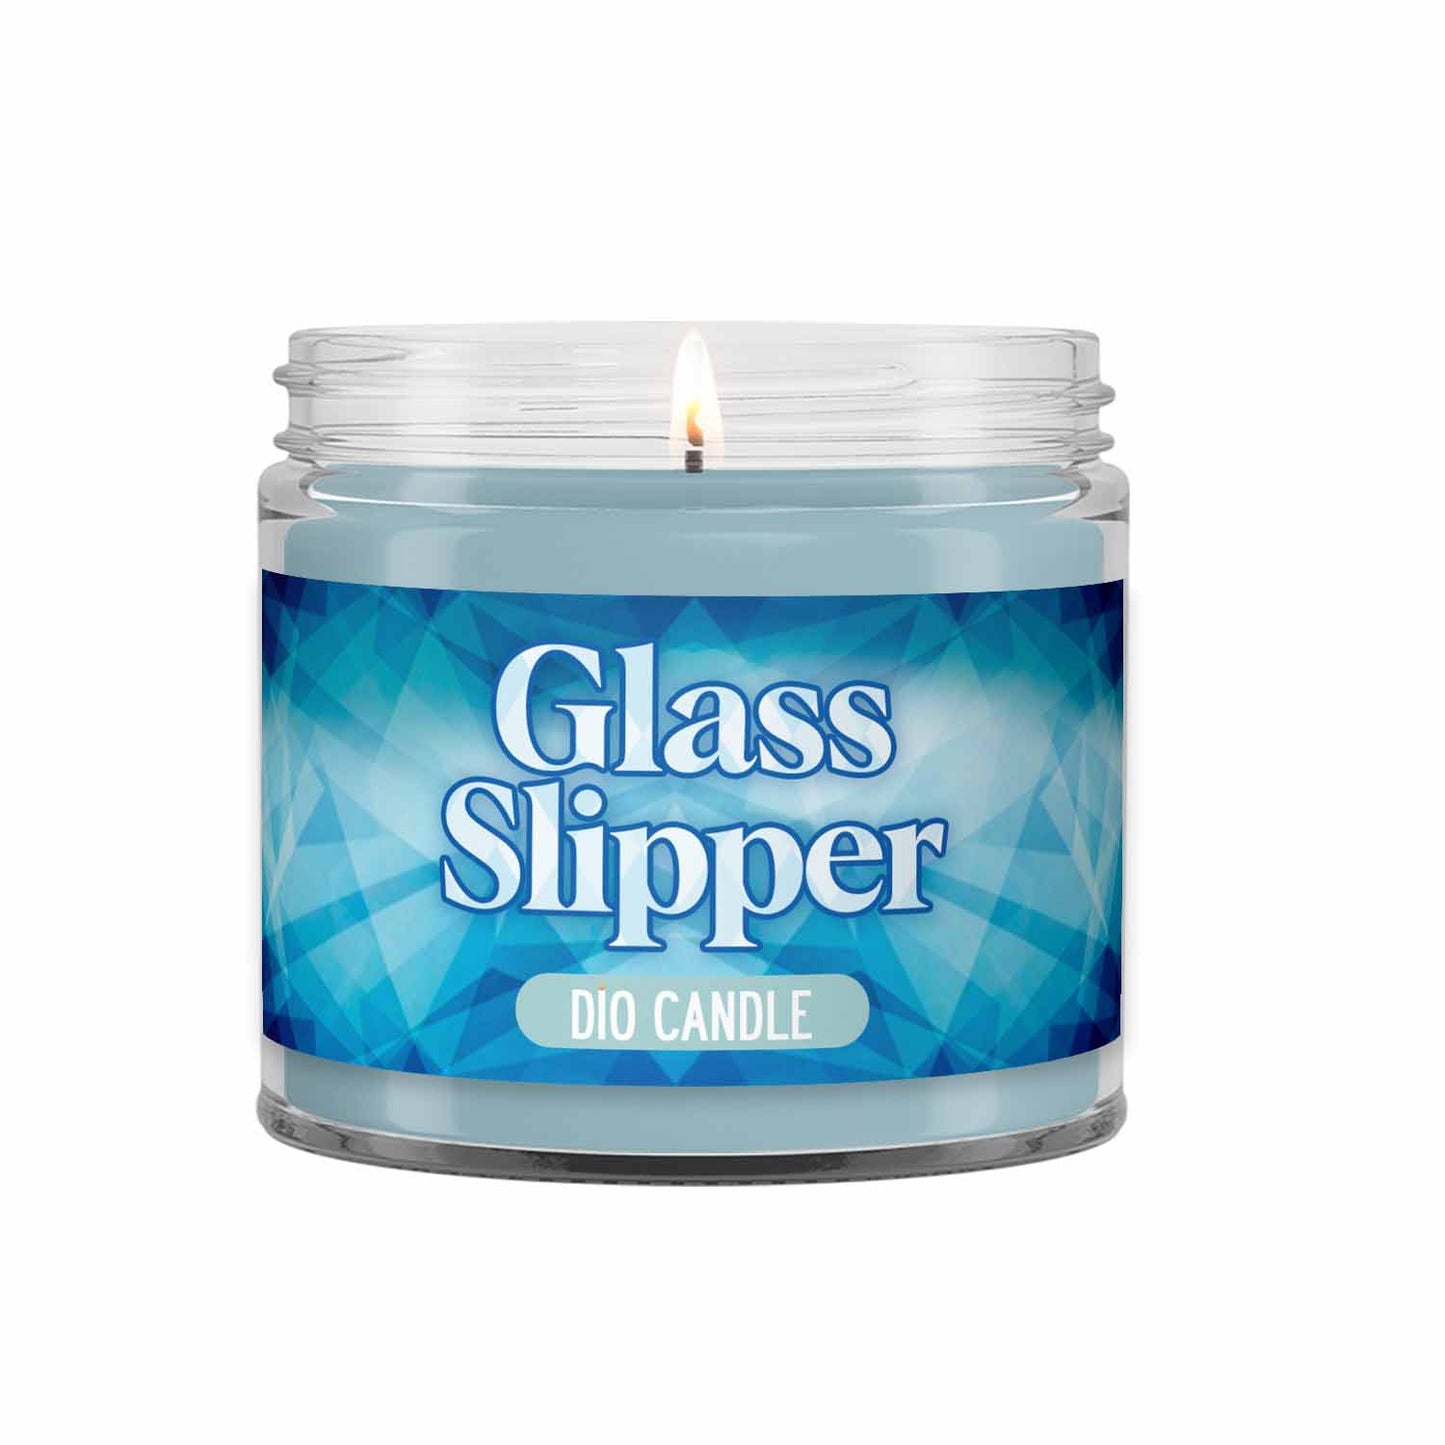 Glass Slipper Candle